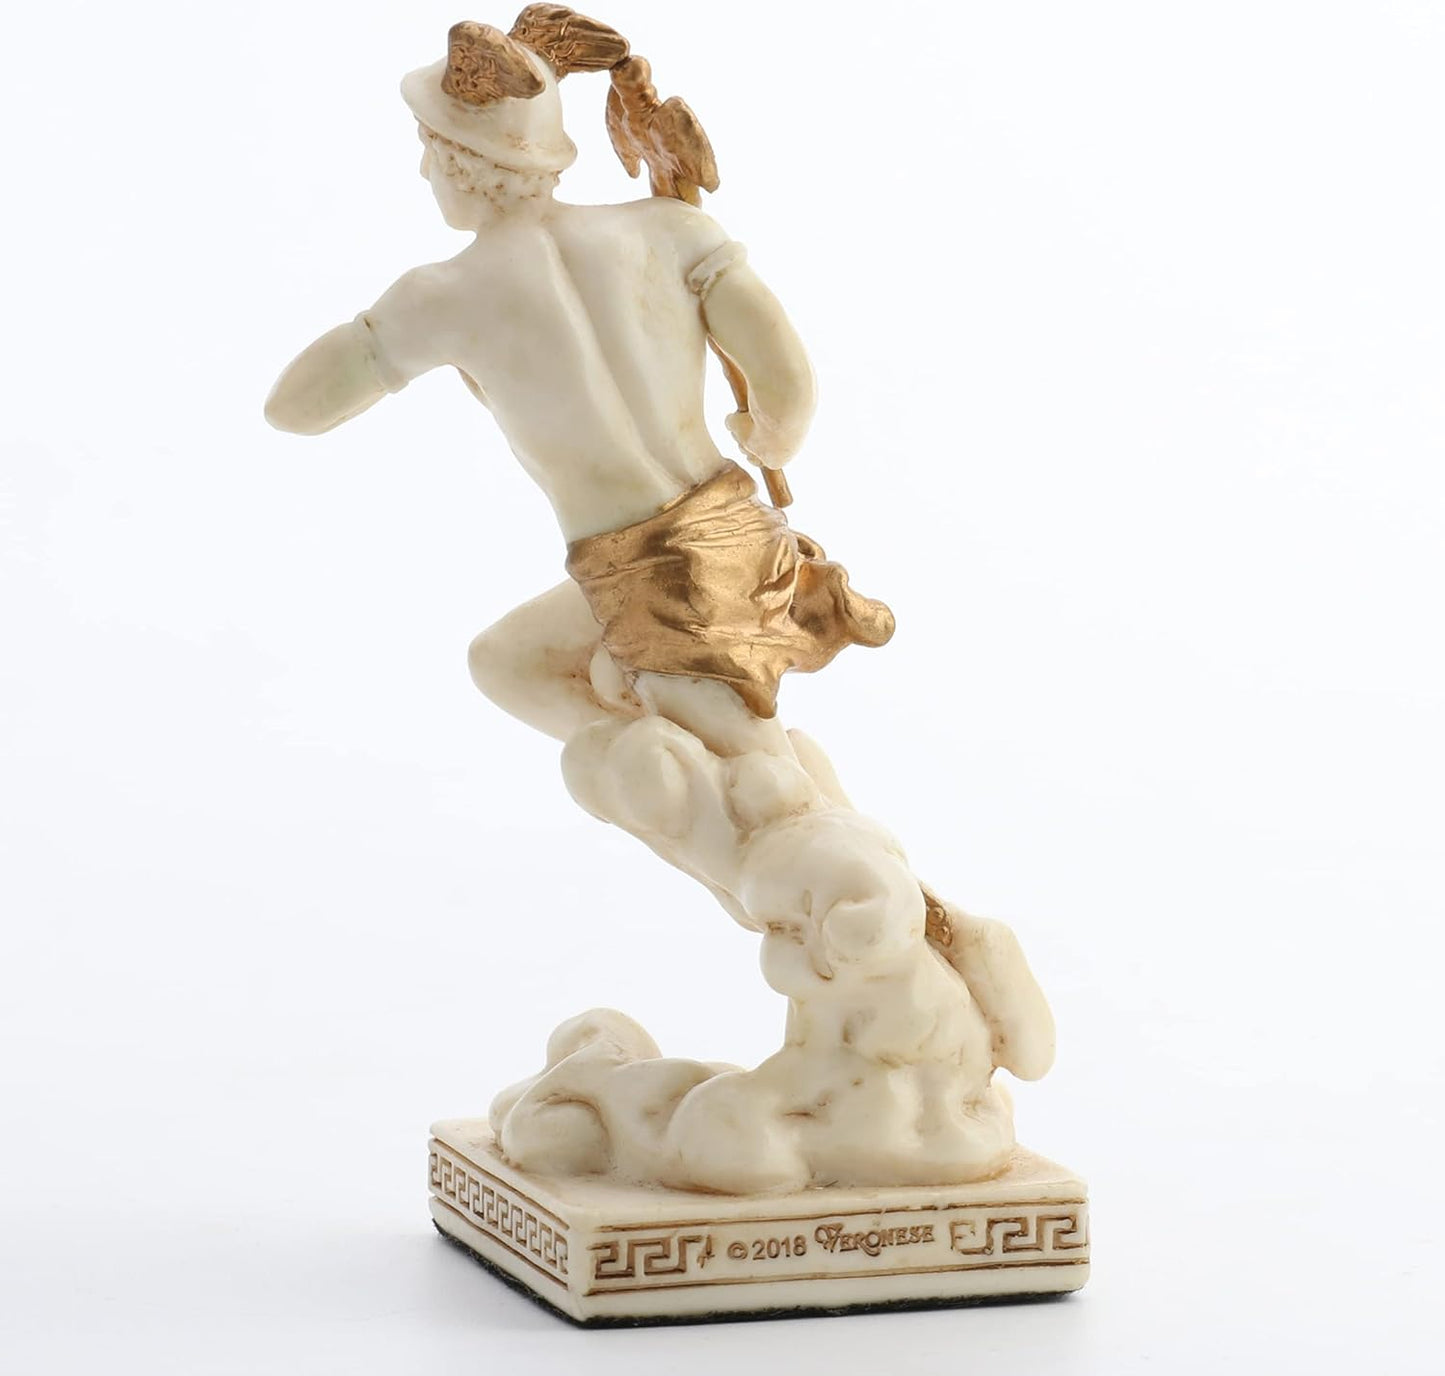 Hermes Greek Gods Miniature Figurine